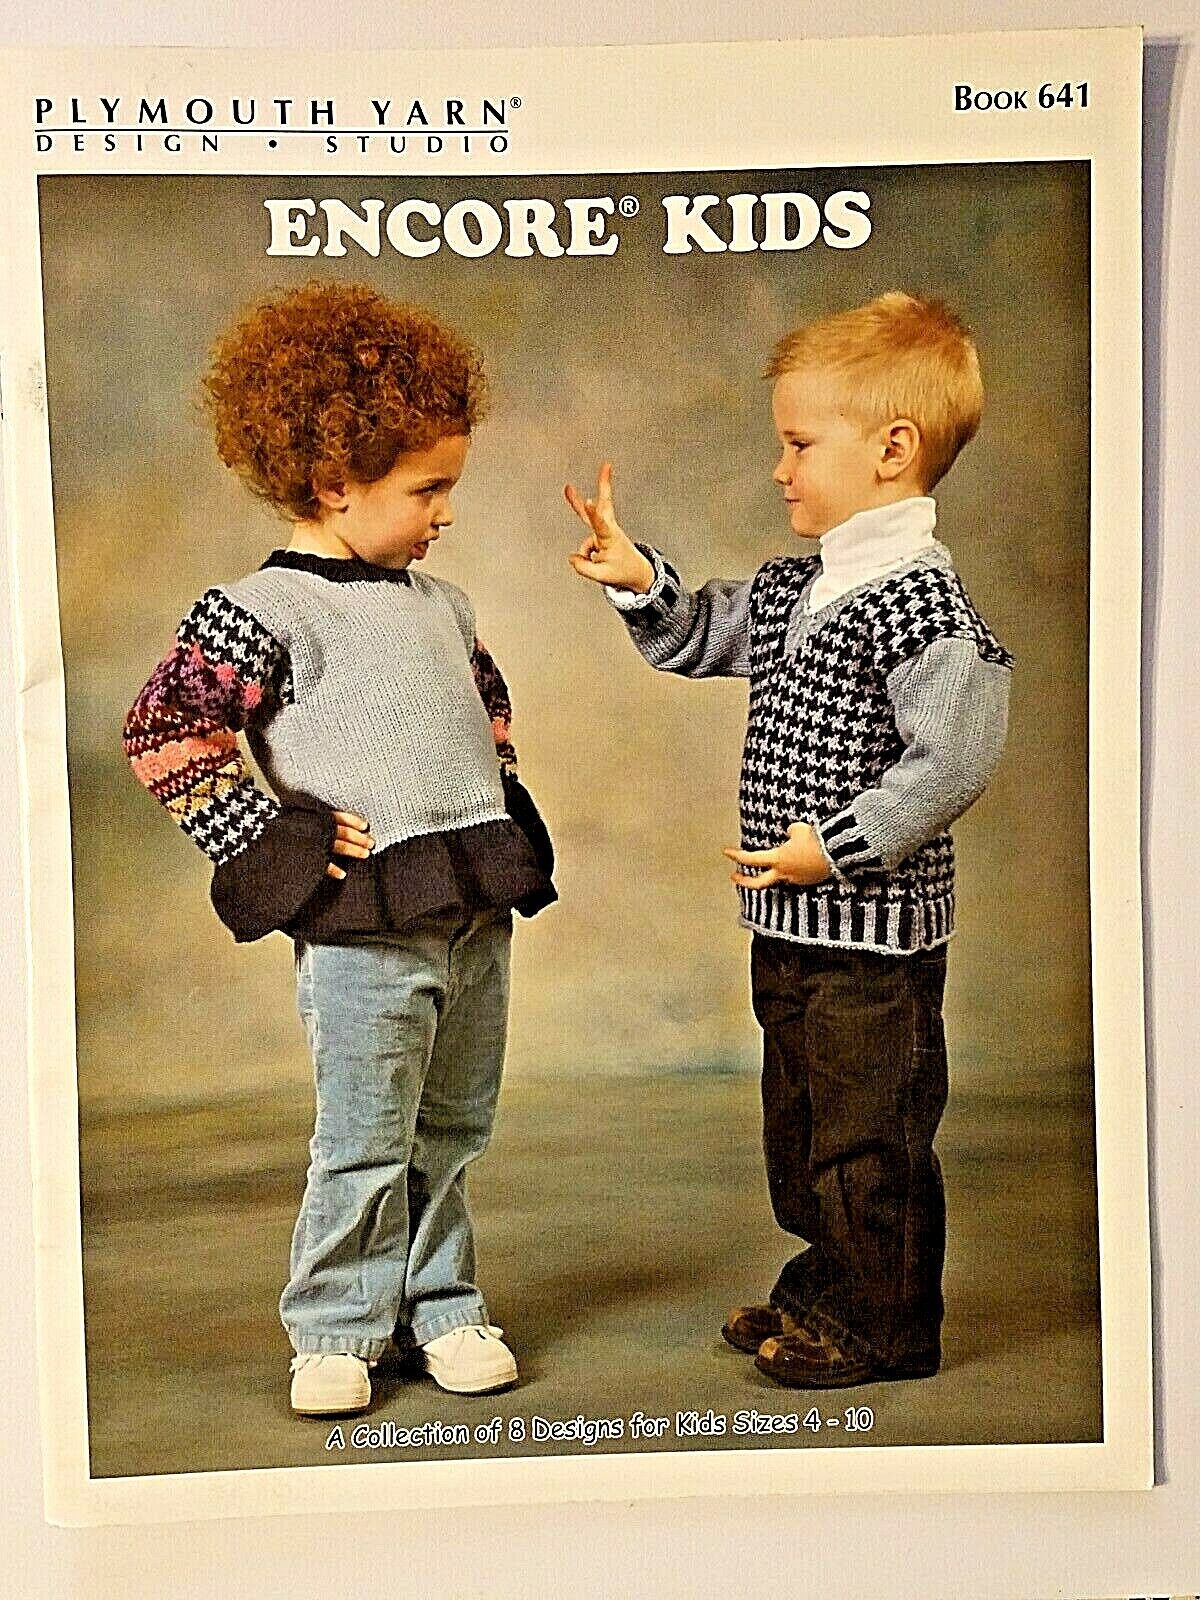 Plymouth Book 641: Encore Kids